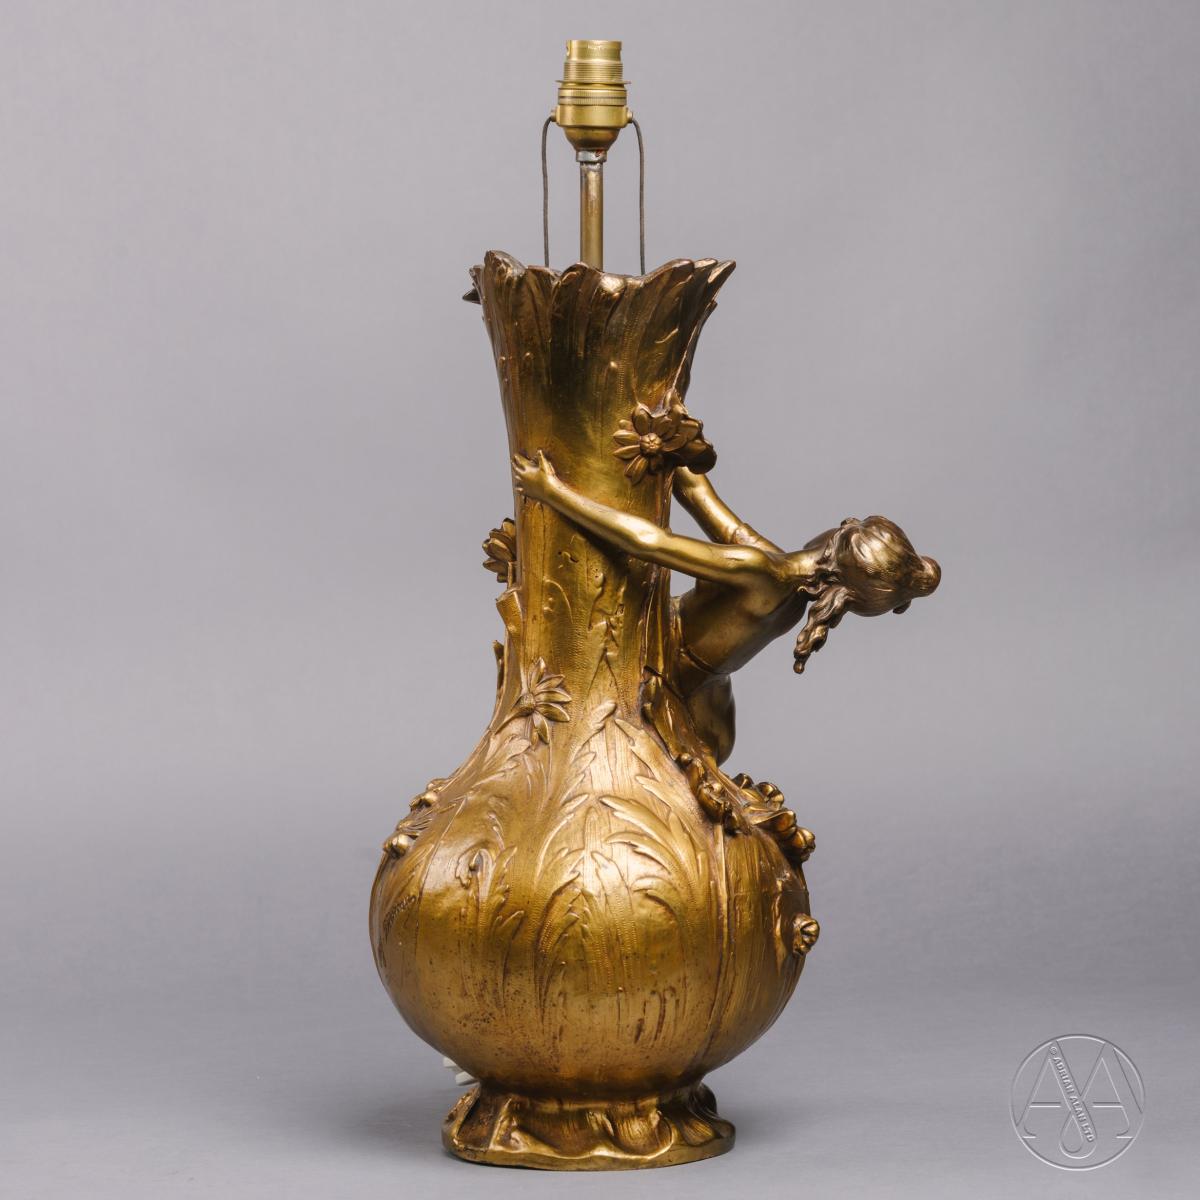 An Art Nouveau Gilt-Bronze Vase Depicting a Naiad, After Auguste Moreau, Now Mounted as a Lamp